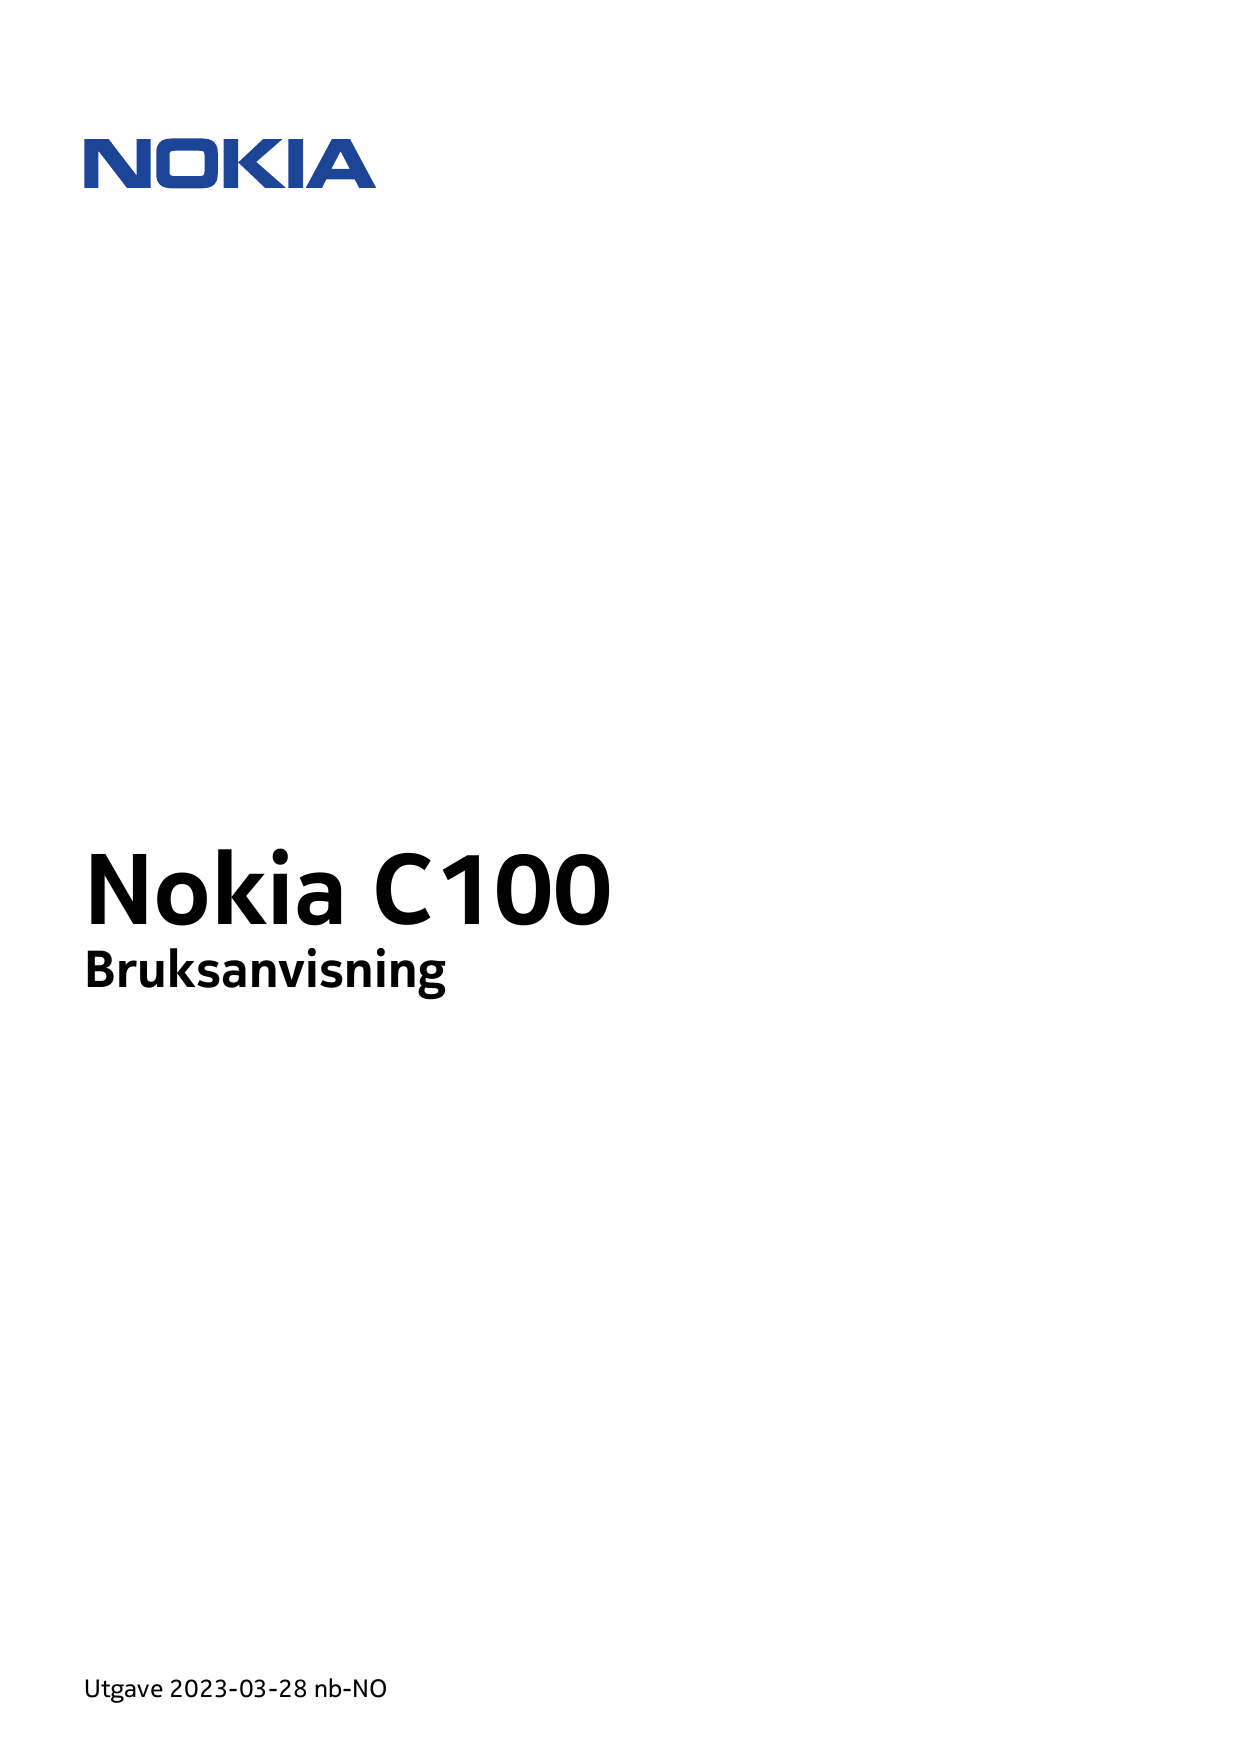 Nokia C100BruksanvisningUtgave 2023-03-28 nb-NO